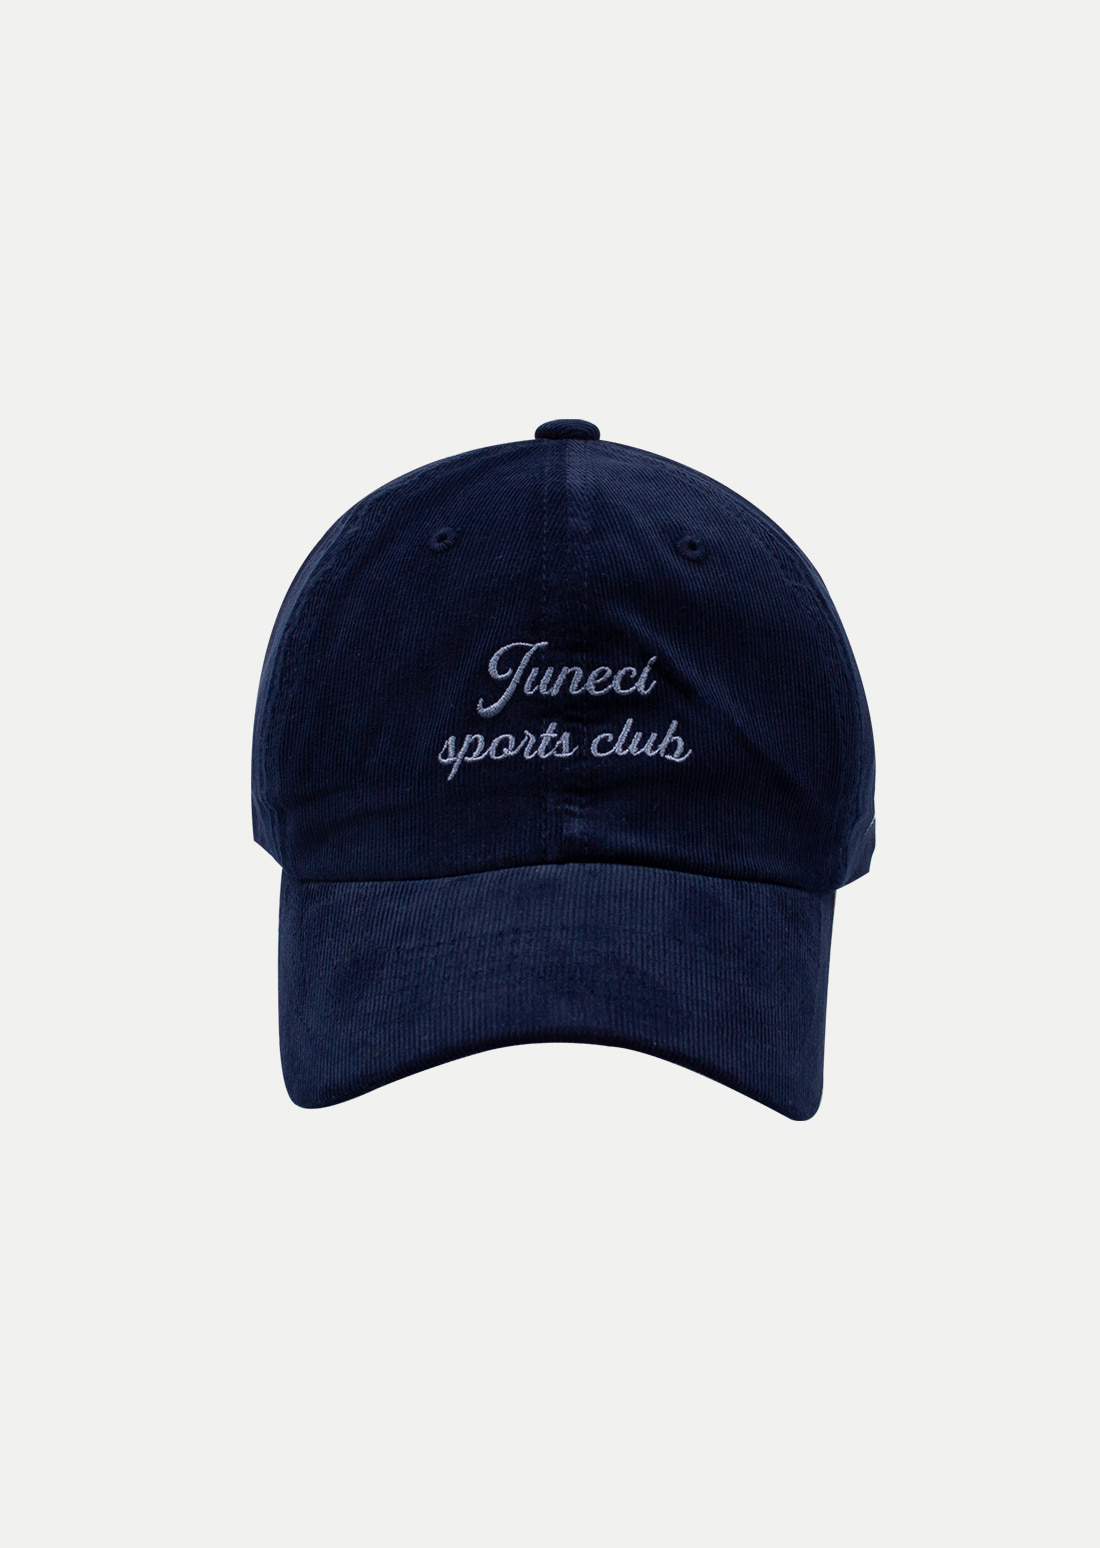 juneci sports club | 주네시 스포츠 클럽